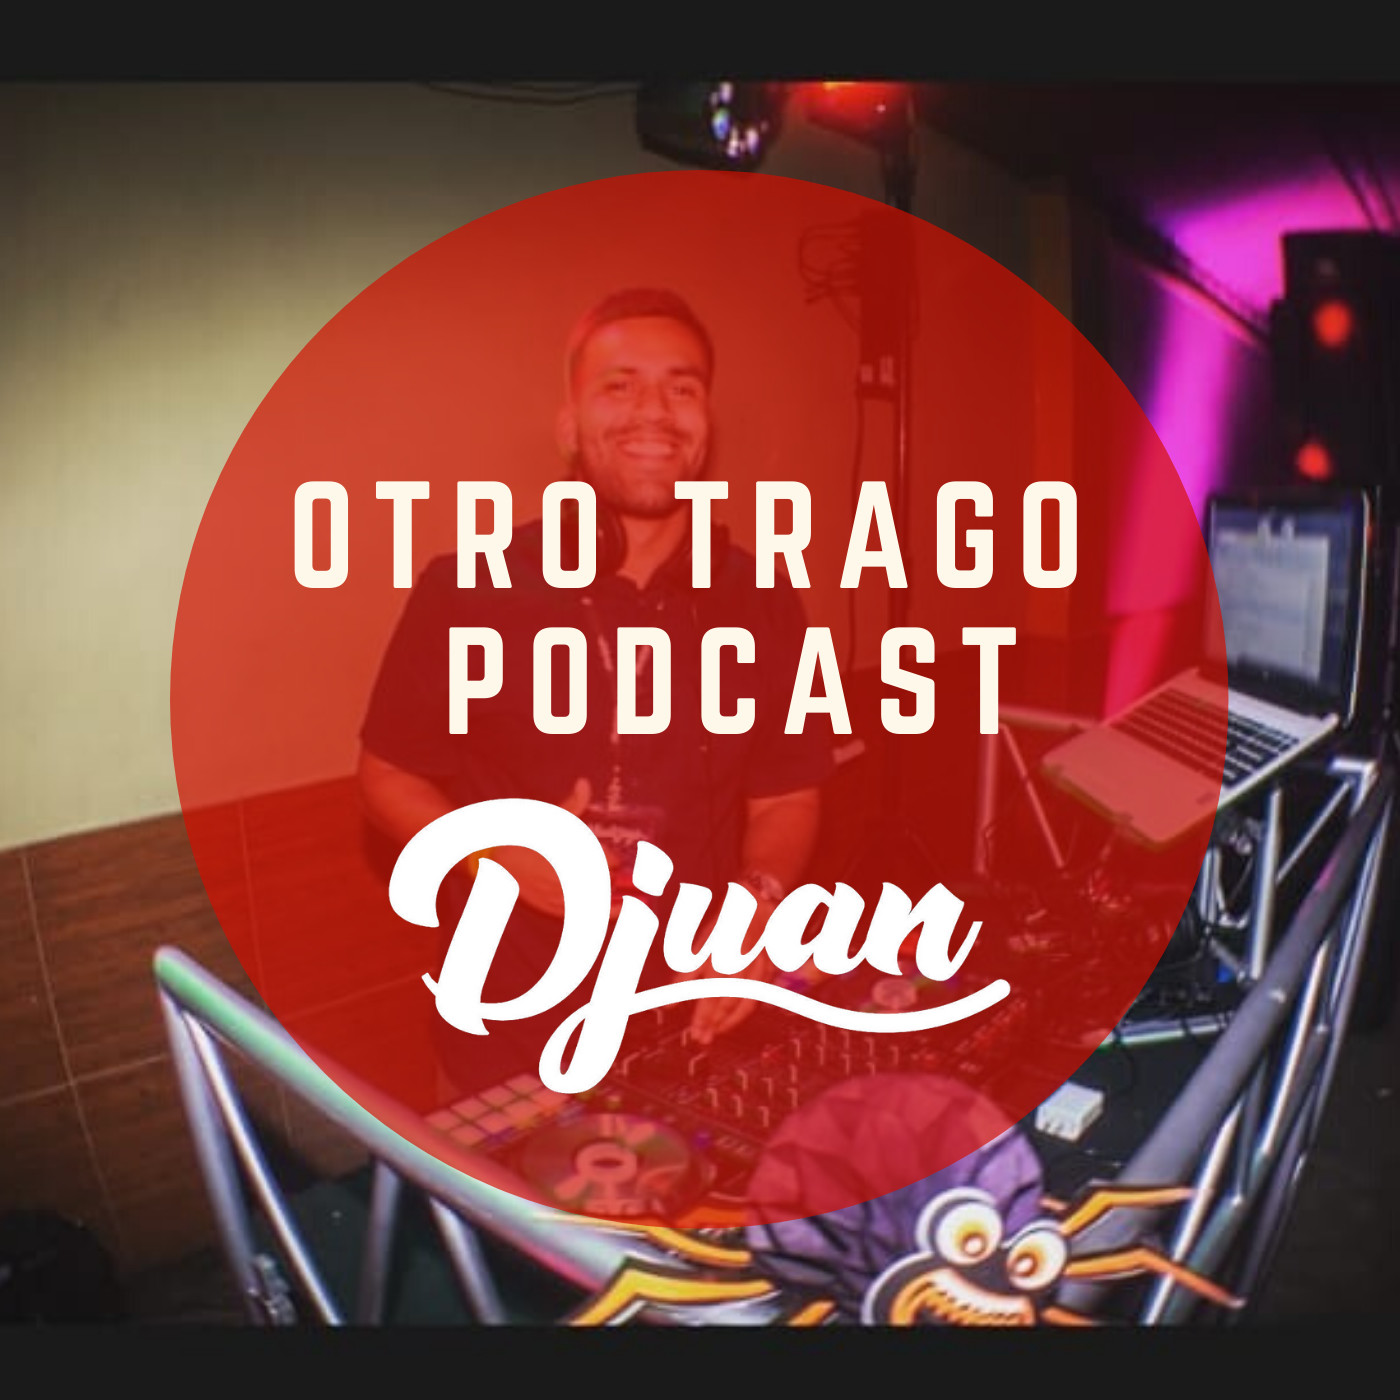 Otro Trago Podcast - DJuan 2019